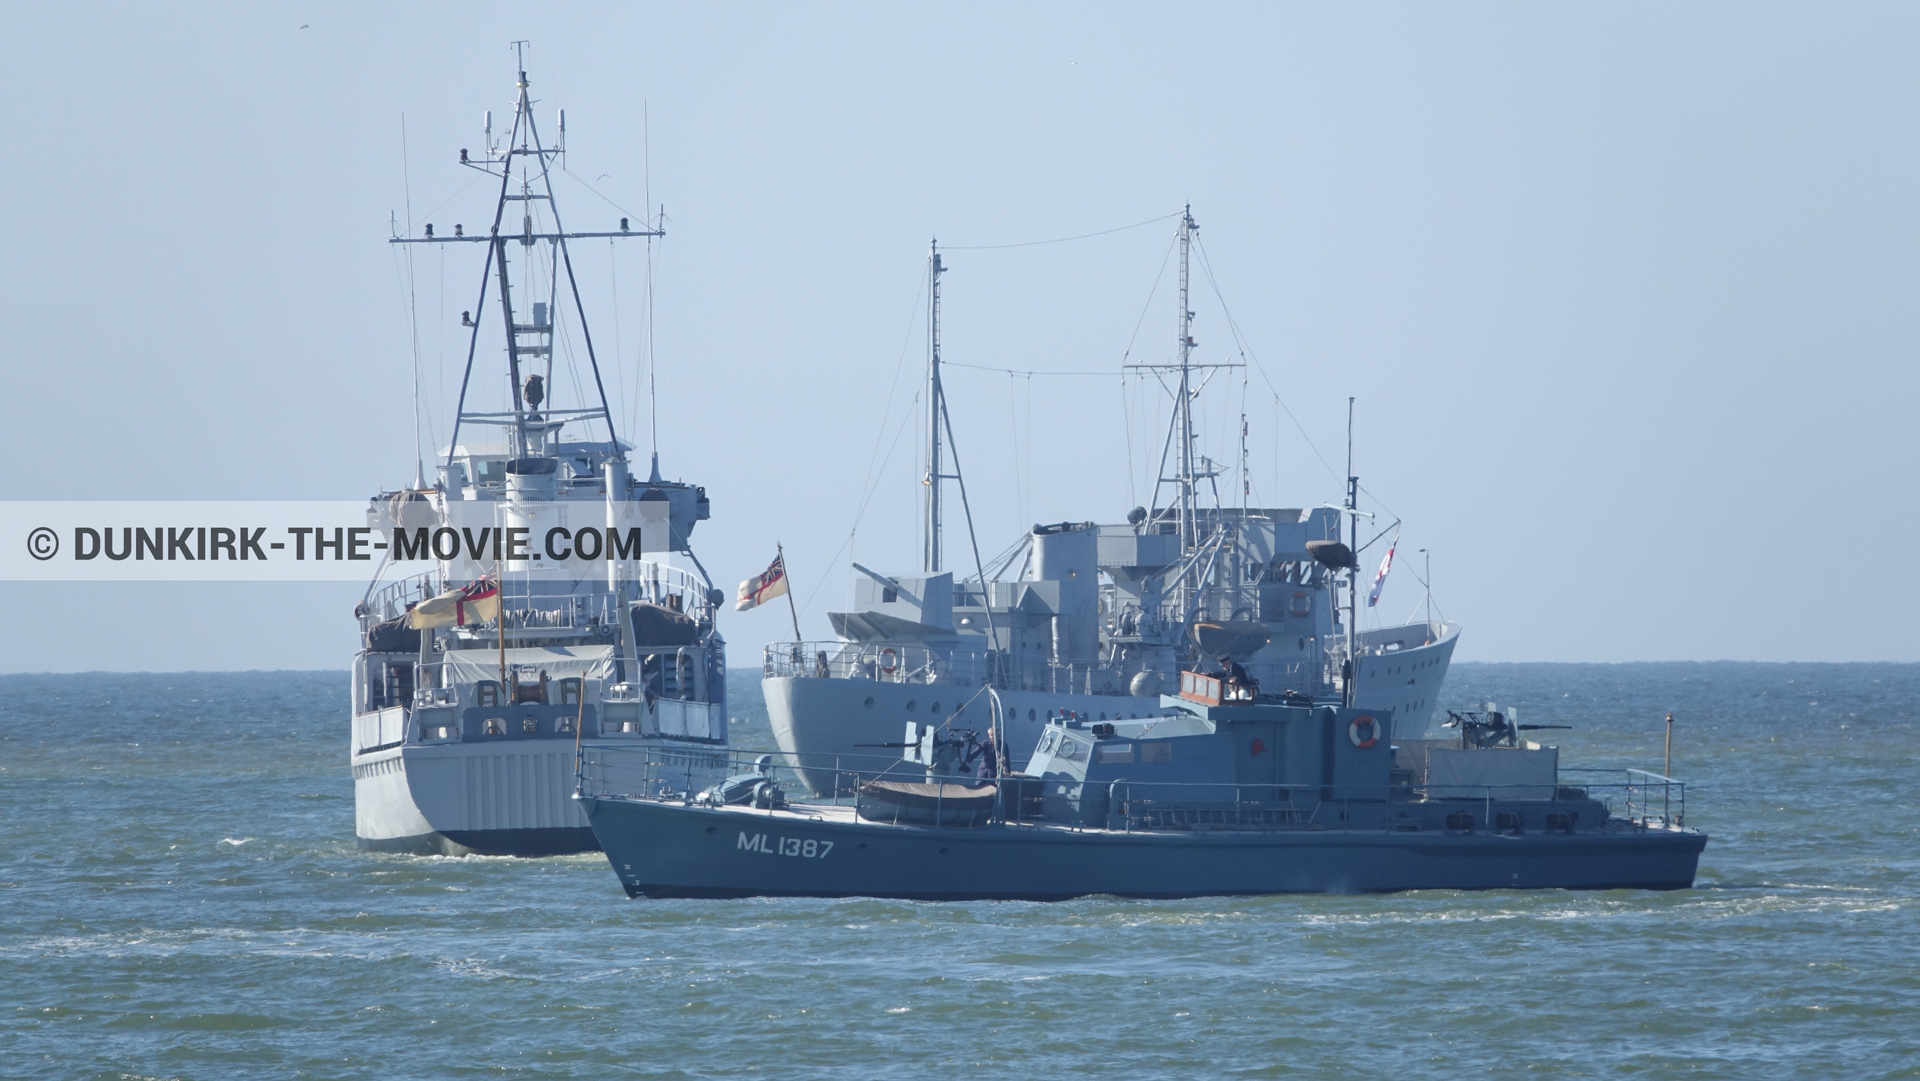 Fotos con barco, cielo azul, HMS Medusa - ML1387, mares calma,  durante el rodaje de la película Dunkerque de Nolan